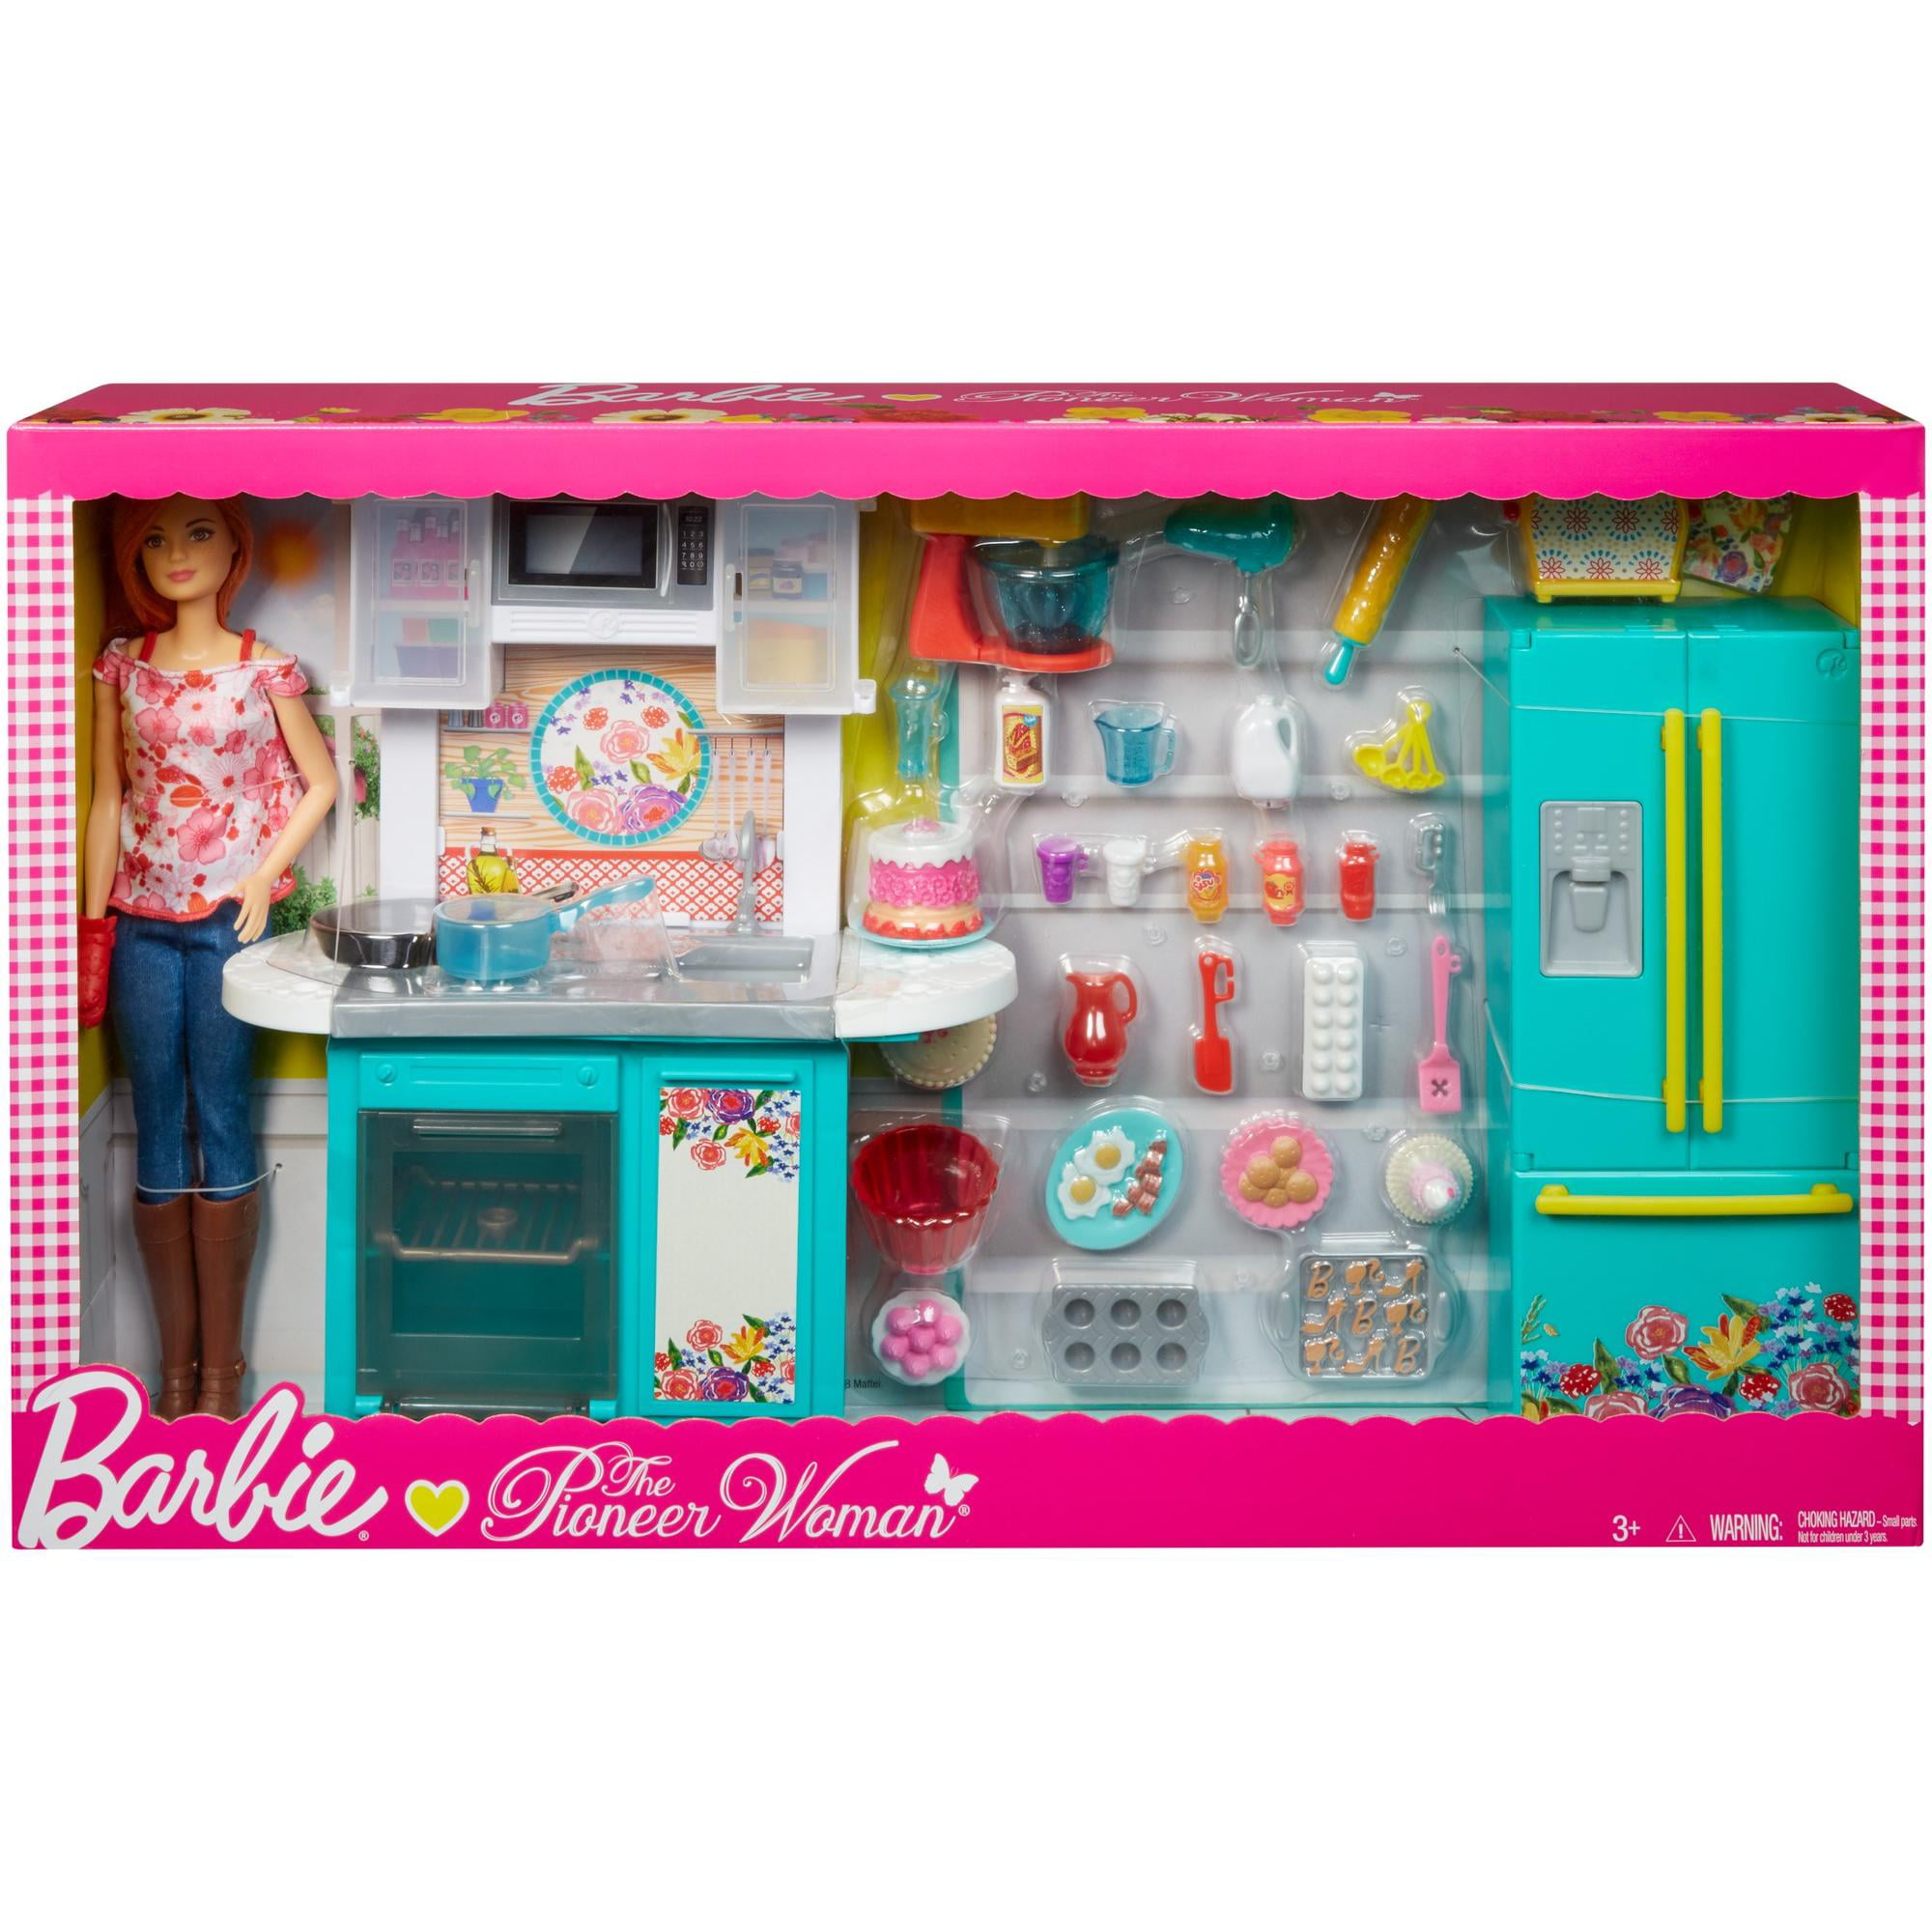 NIB Barbie The Pioneer Woman Kitchen Set